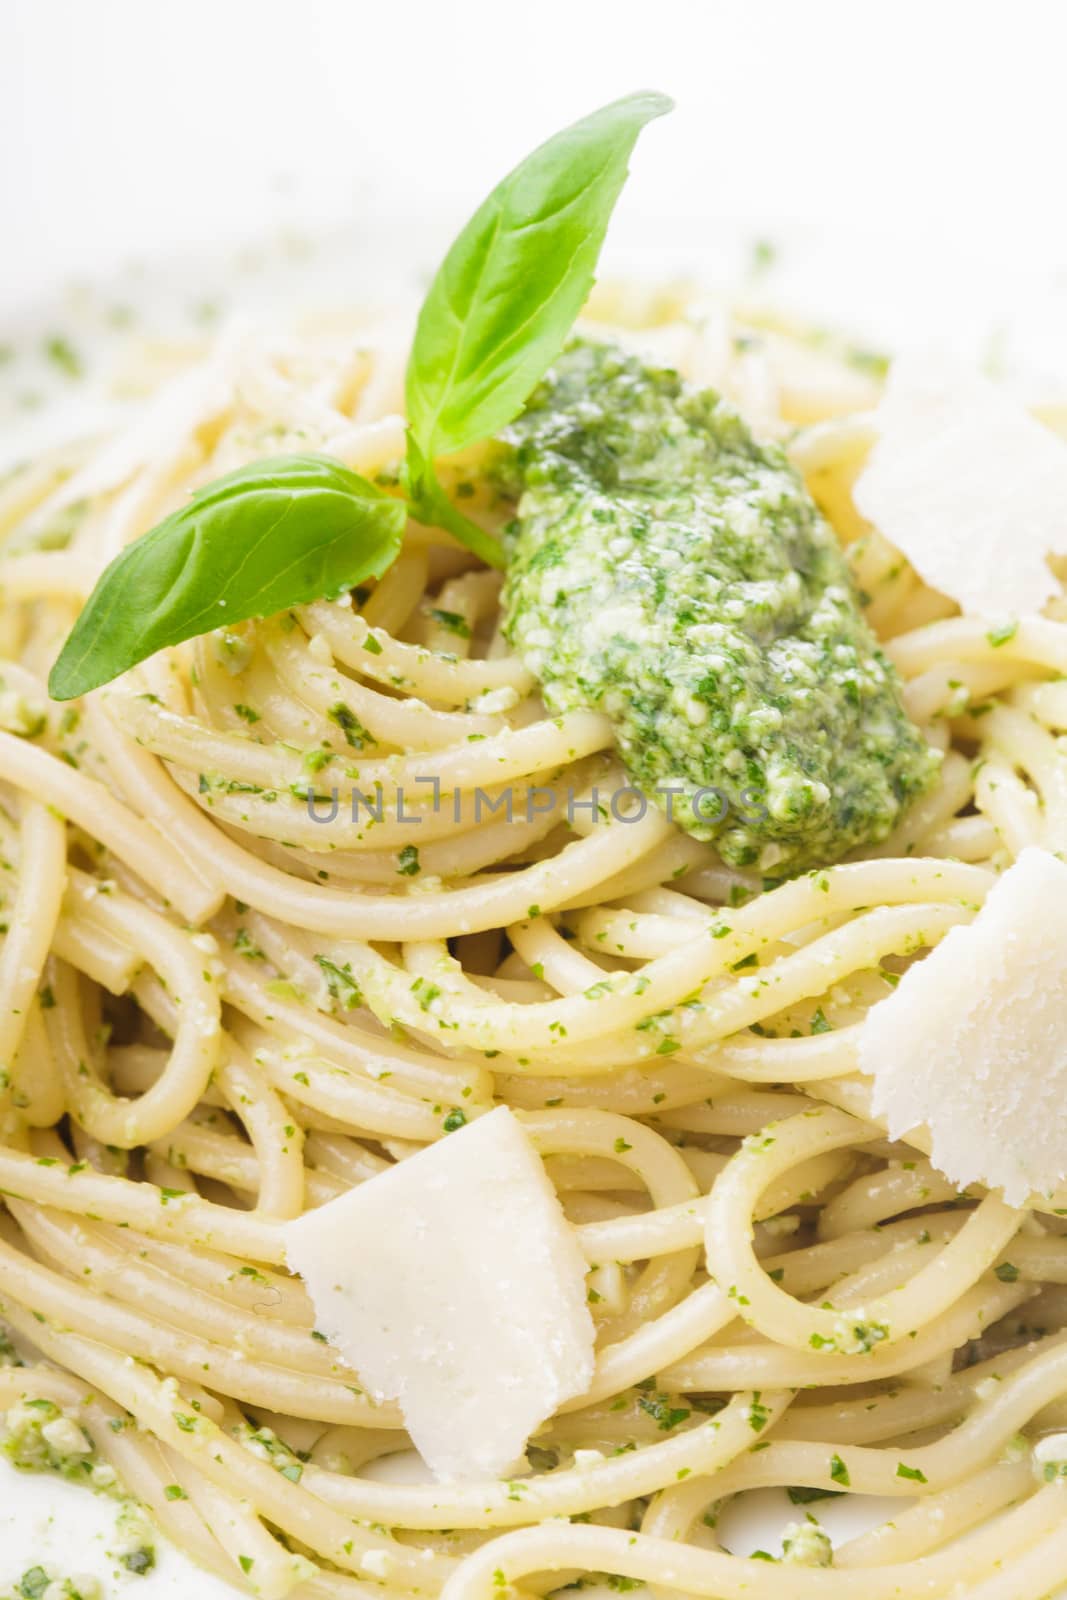 Spaghetti with green pesto by oksix